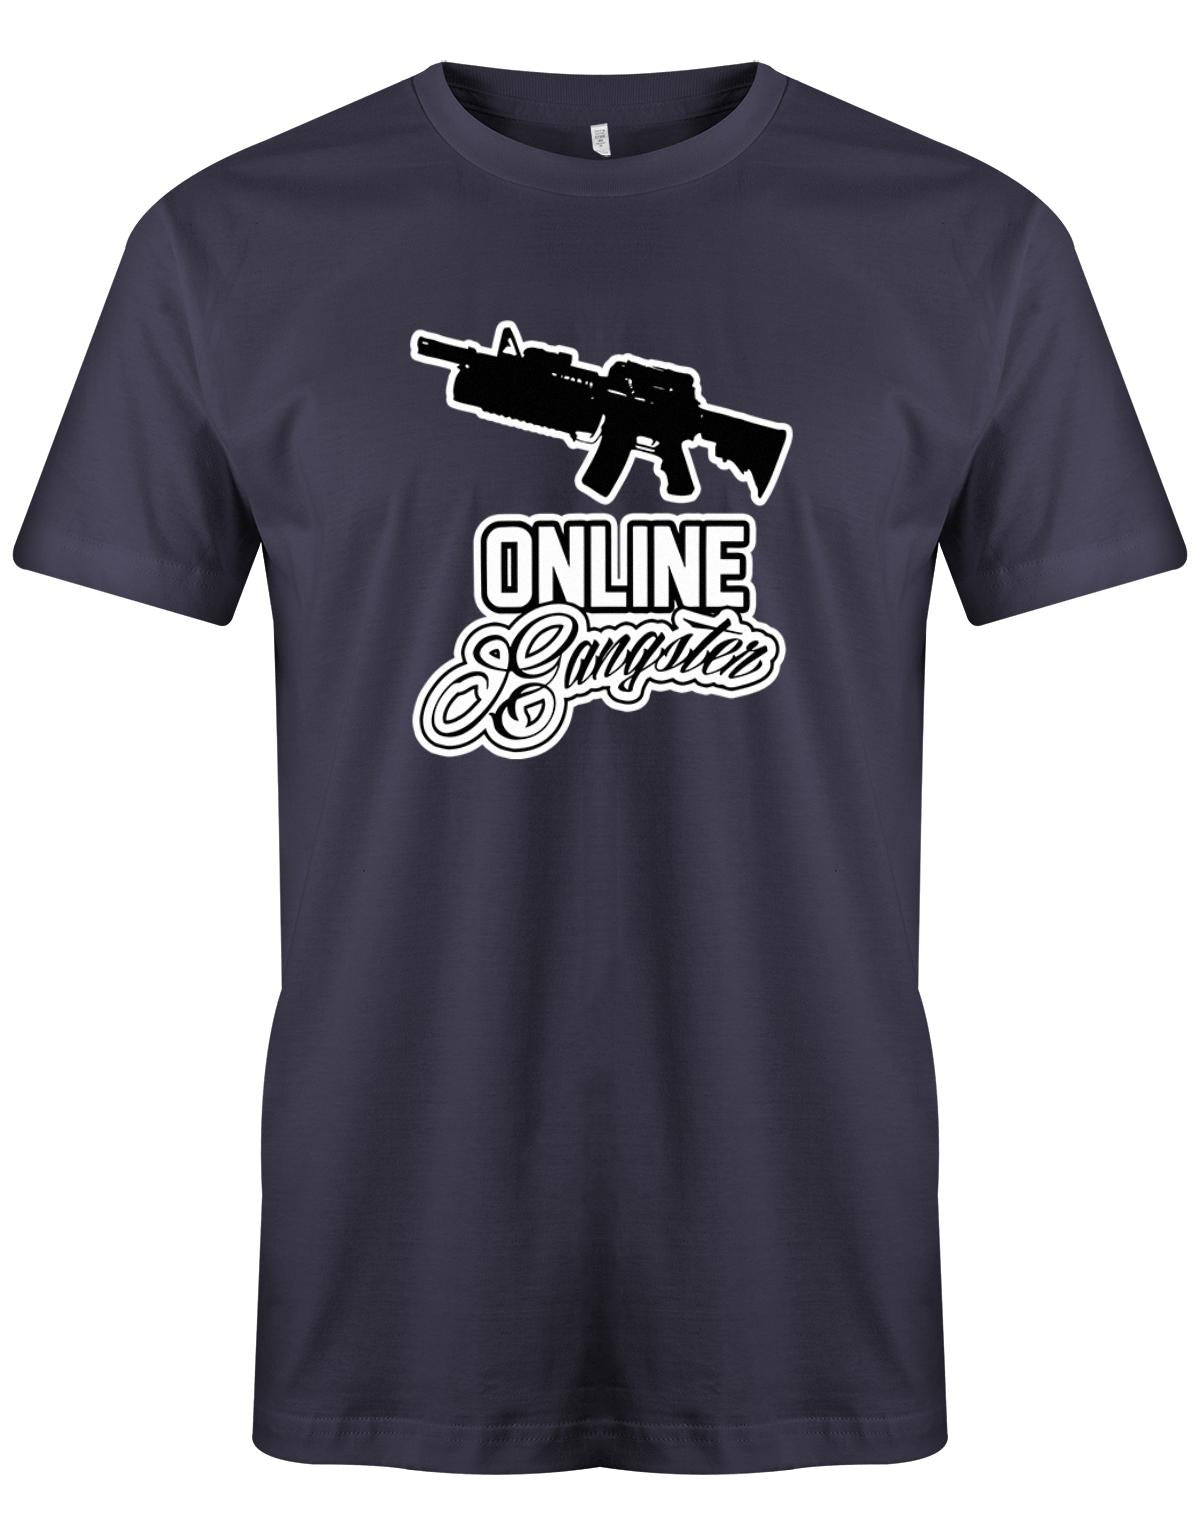 Online-Gangster-Herren-Shirt-Navy